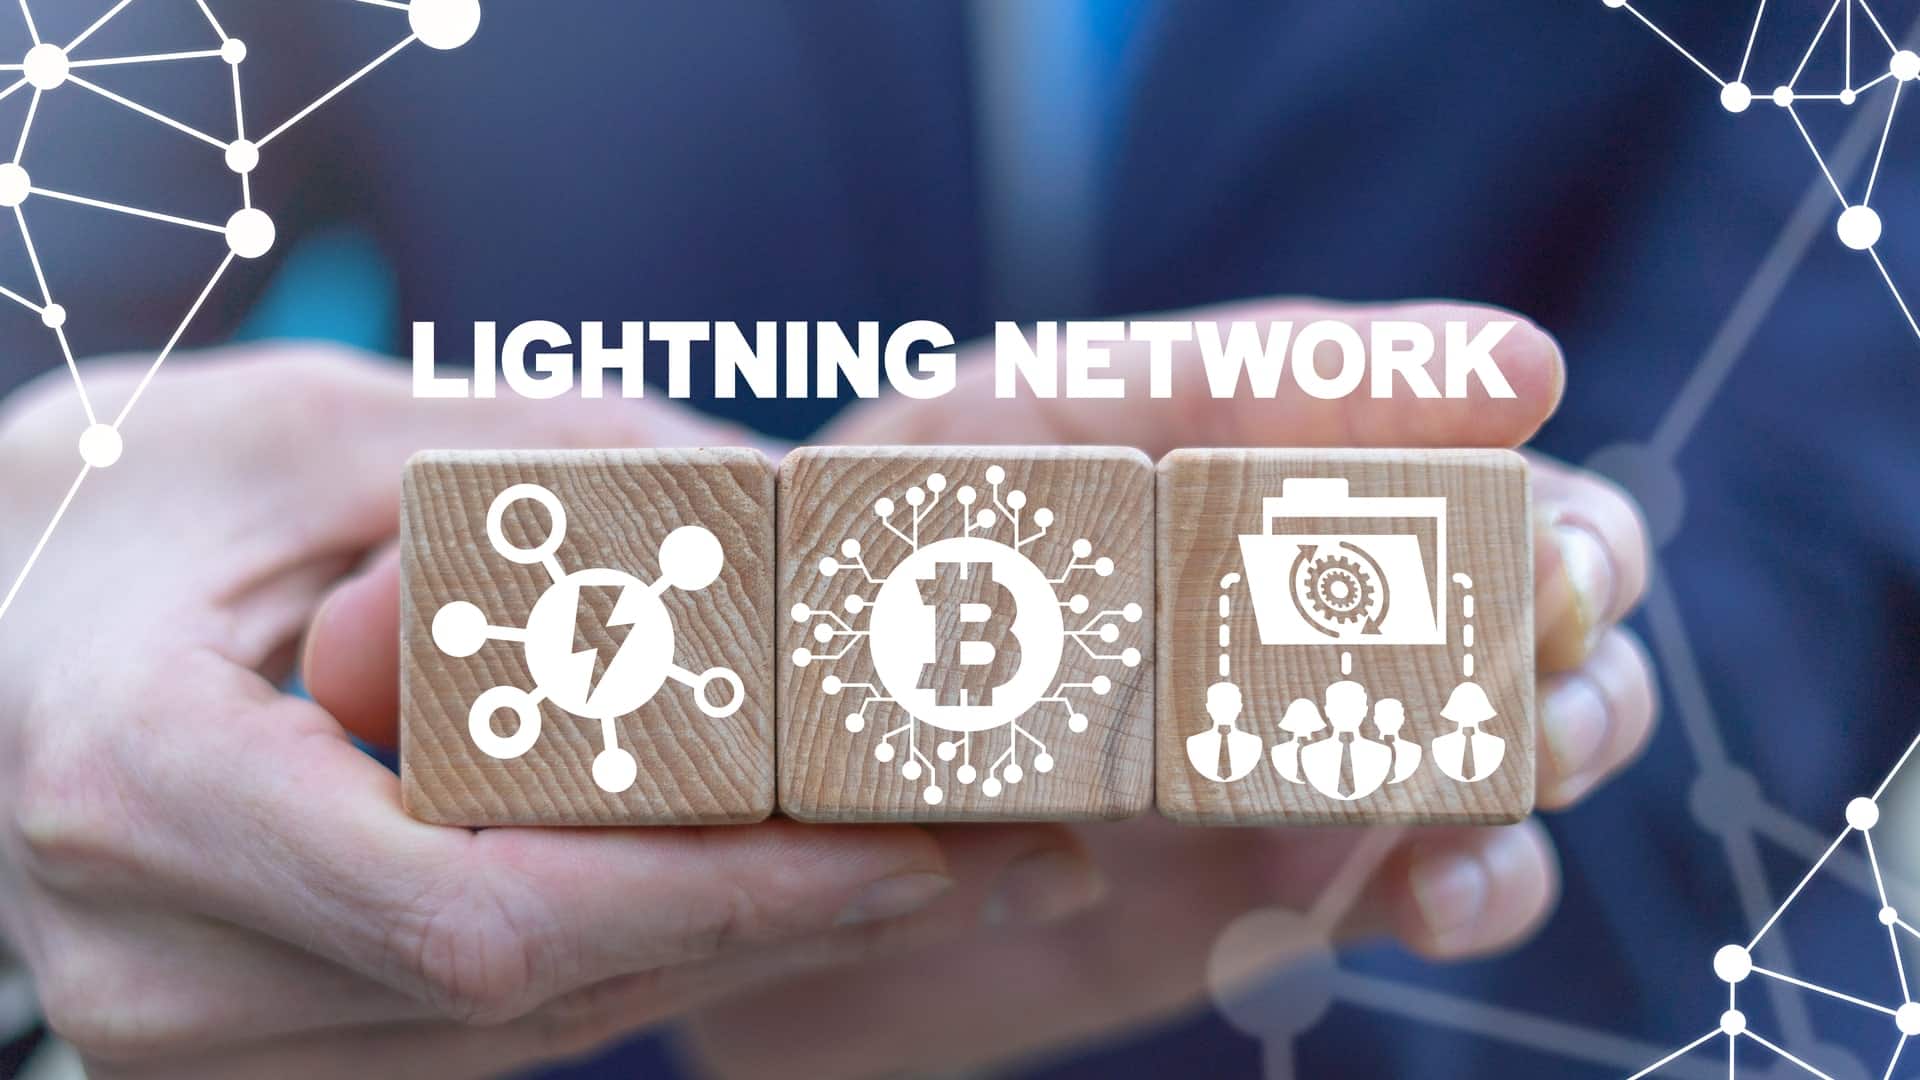 Lightning Network prichádza